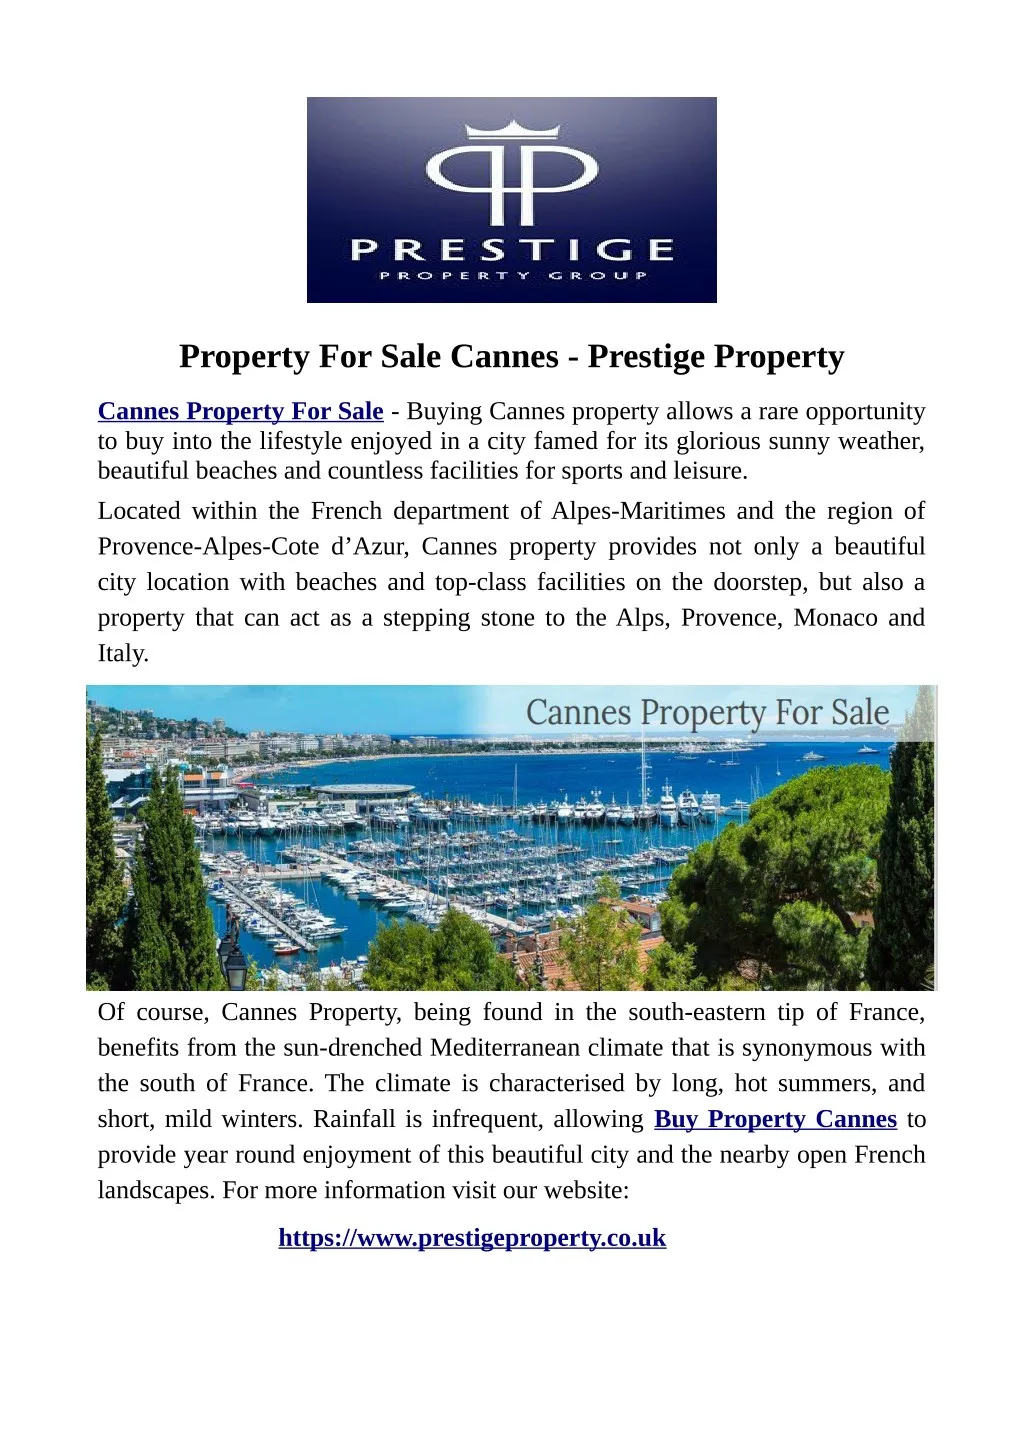 property for sale cannes prestige property